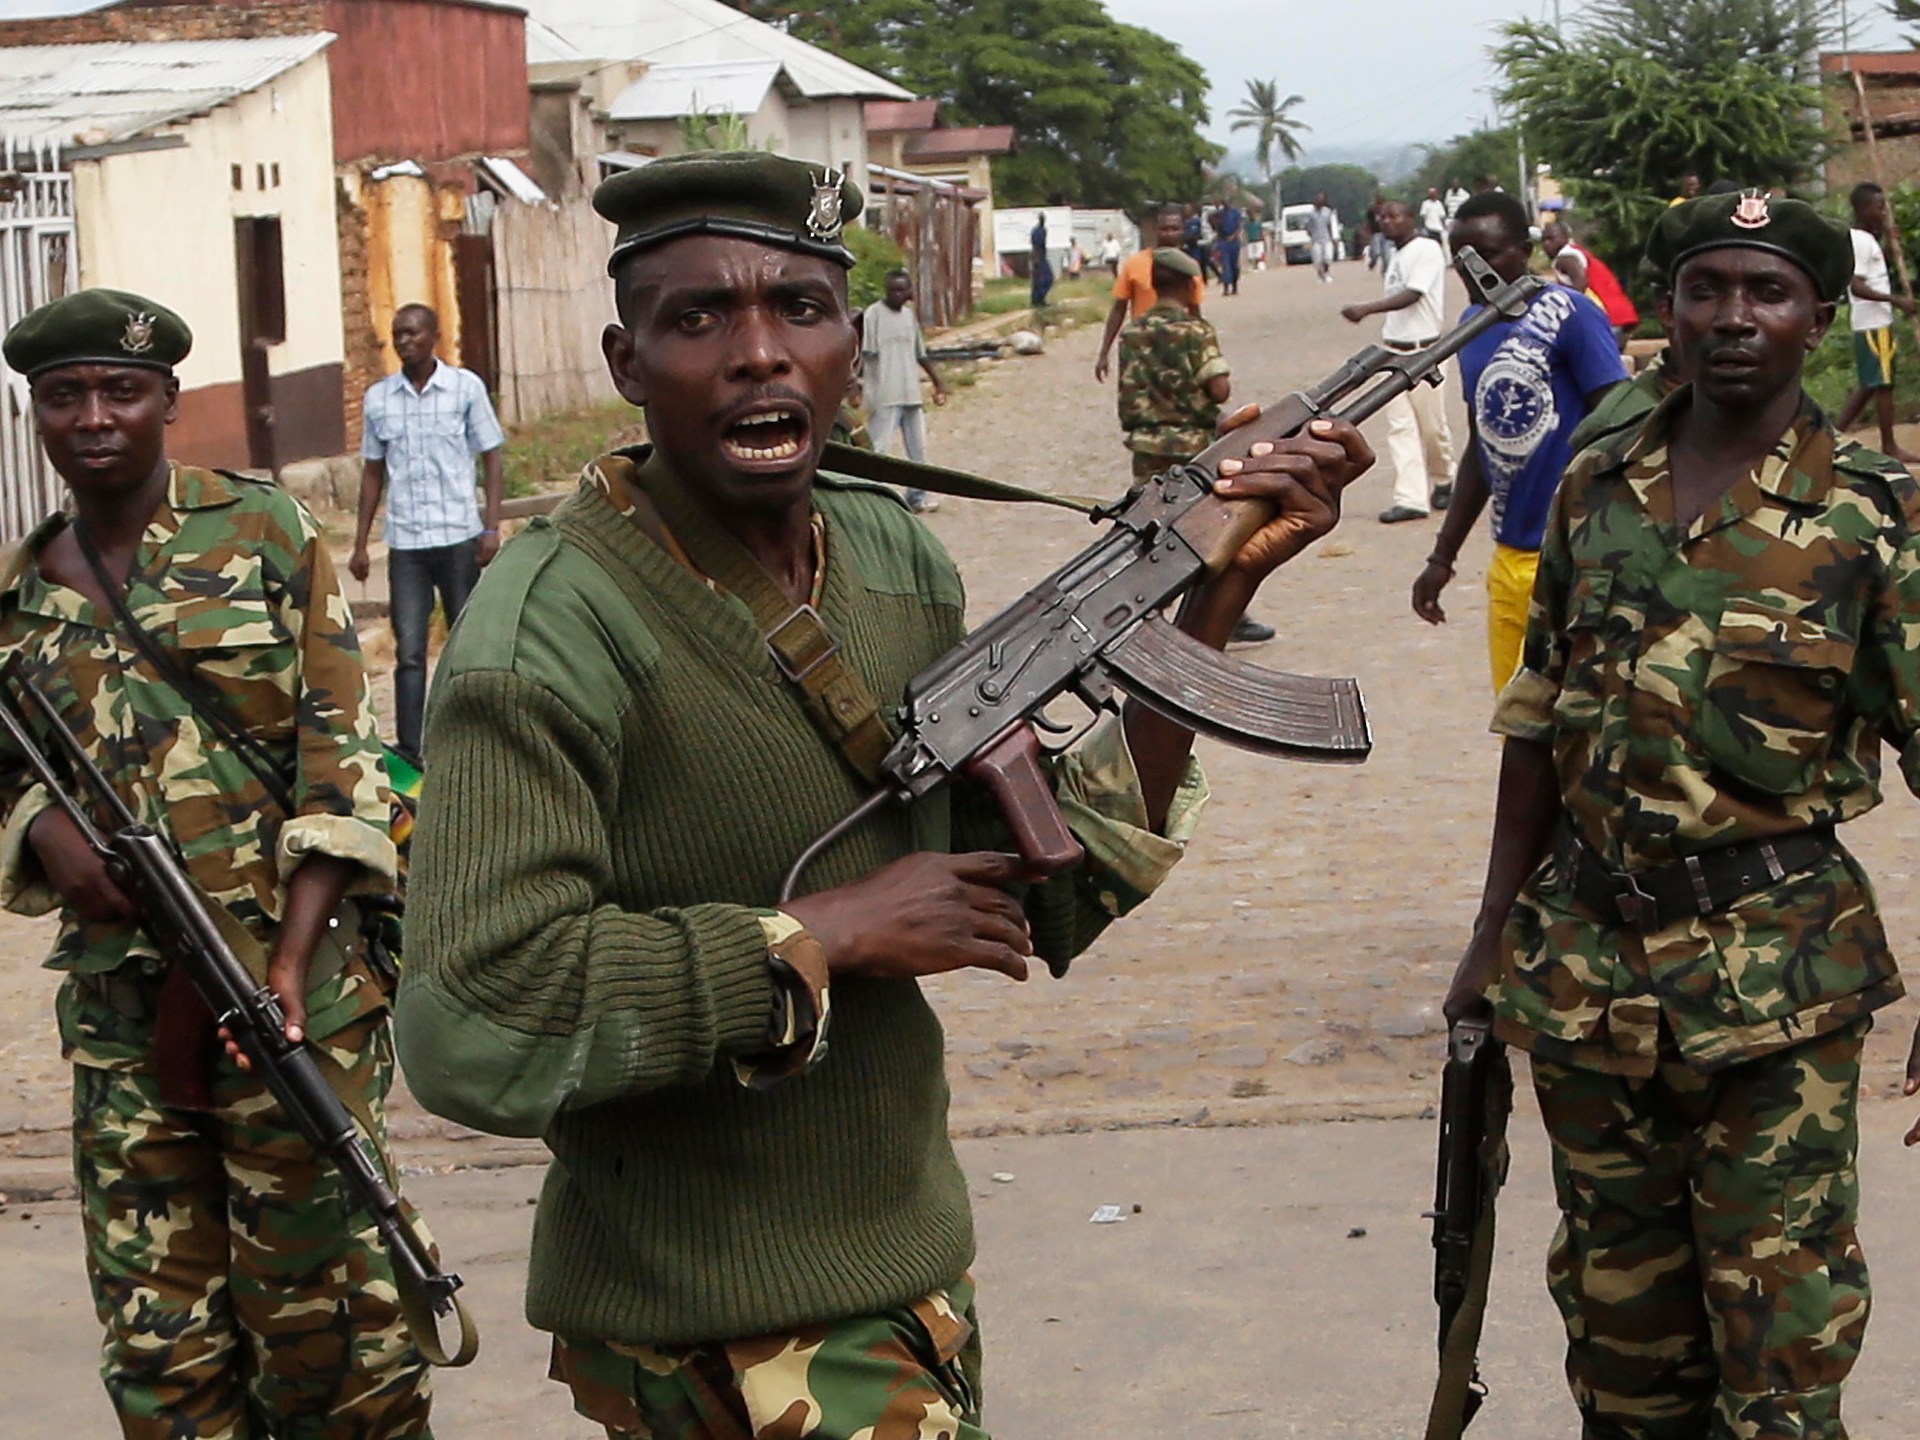 rebel-attack-in-western-burundi-kills-at-least-20